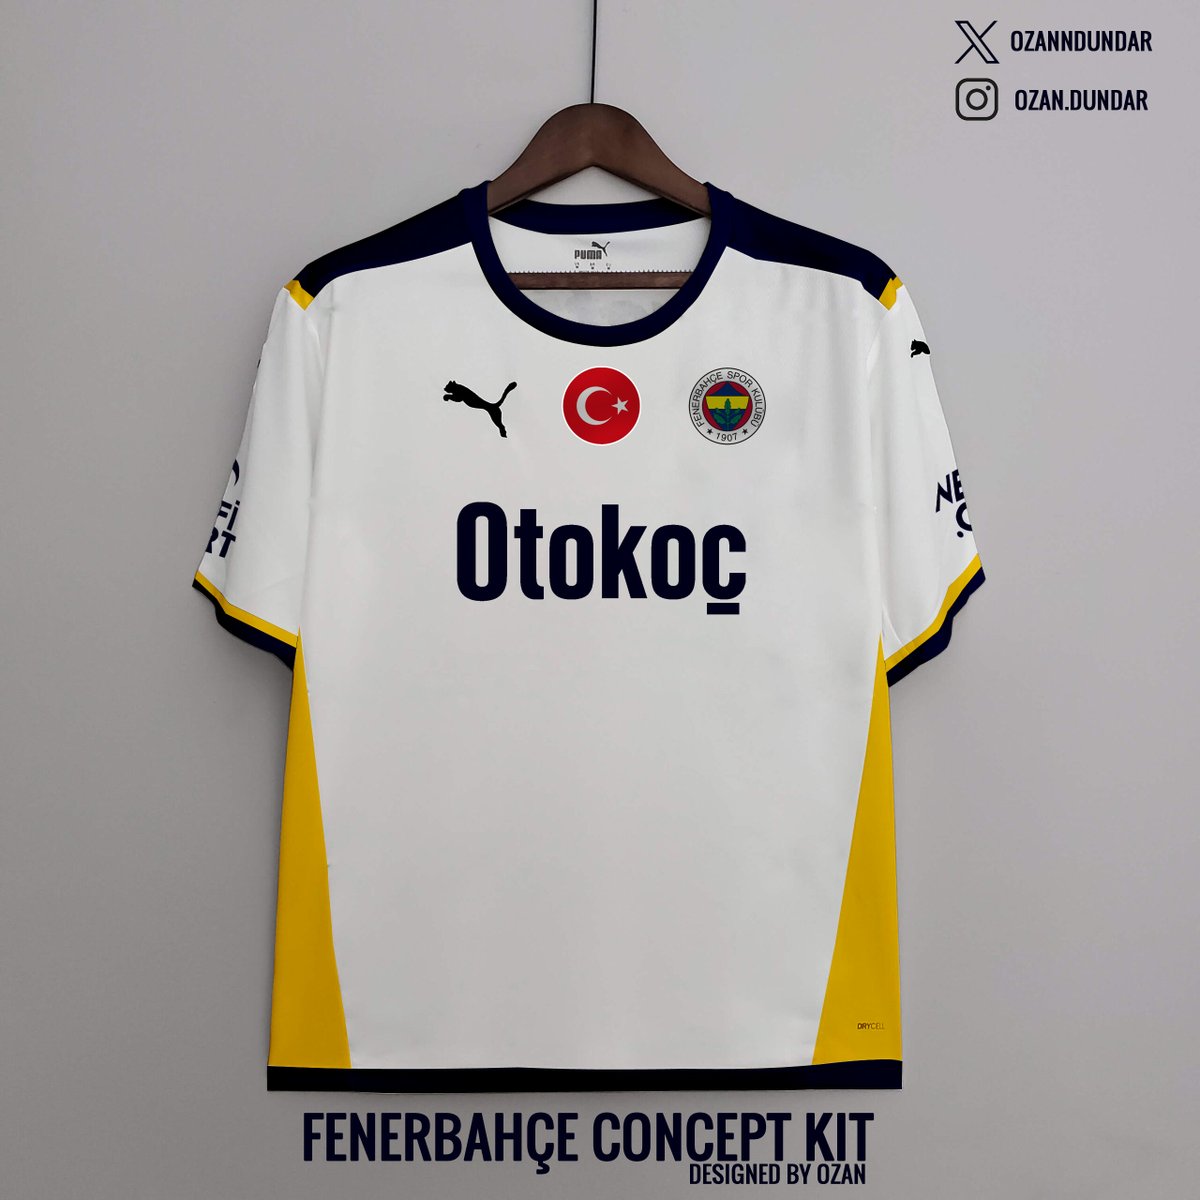 Fenerbahçe x Puma Concept Kit Design.
#fenerbahçe #forma #conceptkit #süperlig